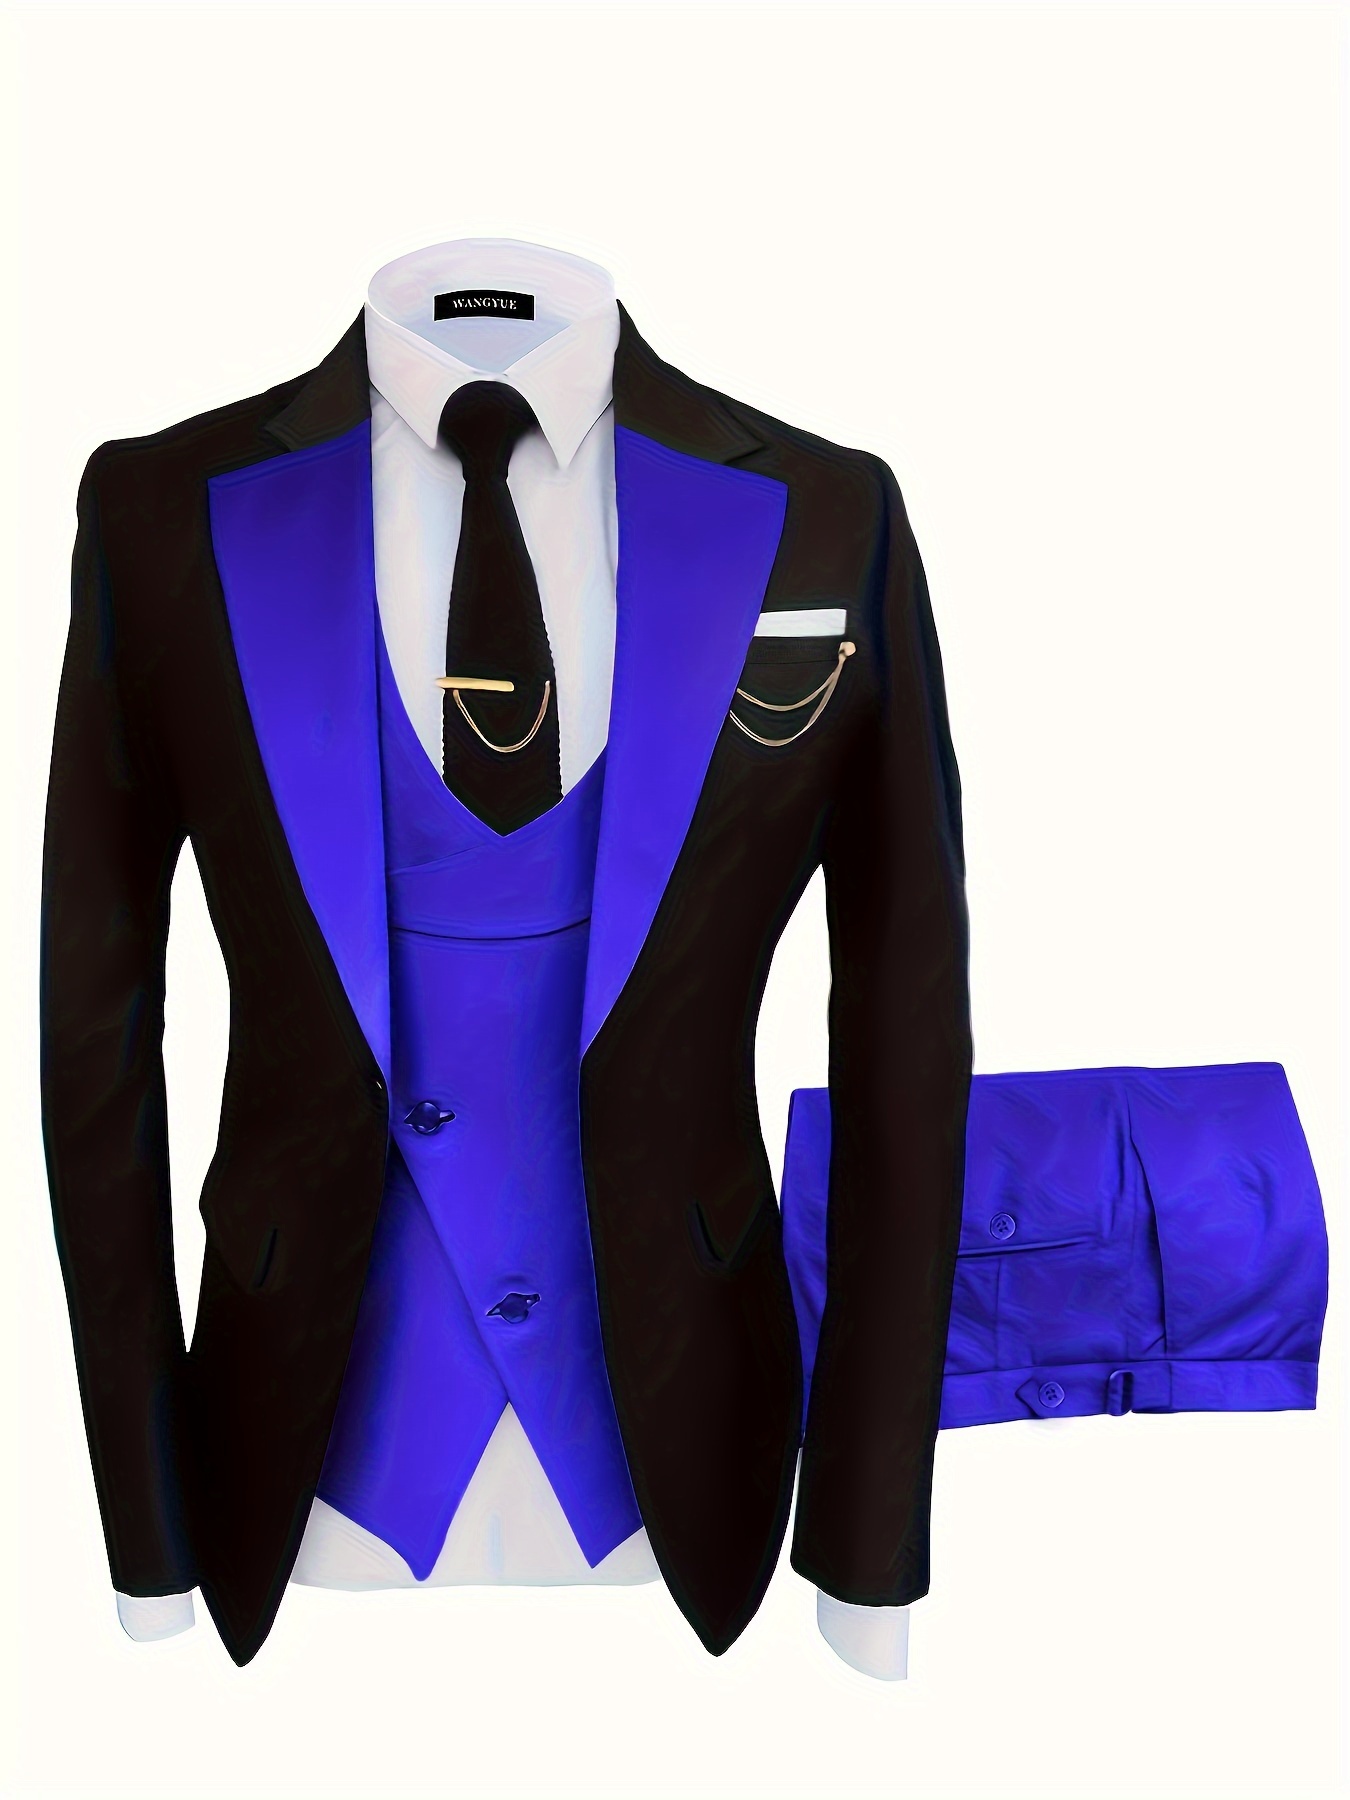 Suits for Men,Mens Suits 3 Piece Slim Fit Jacket Vest Pants Outfits Blazer  Business Wedding Formal Tuxedo Elegant Daily Blazer Jacket 